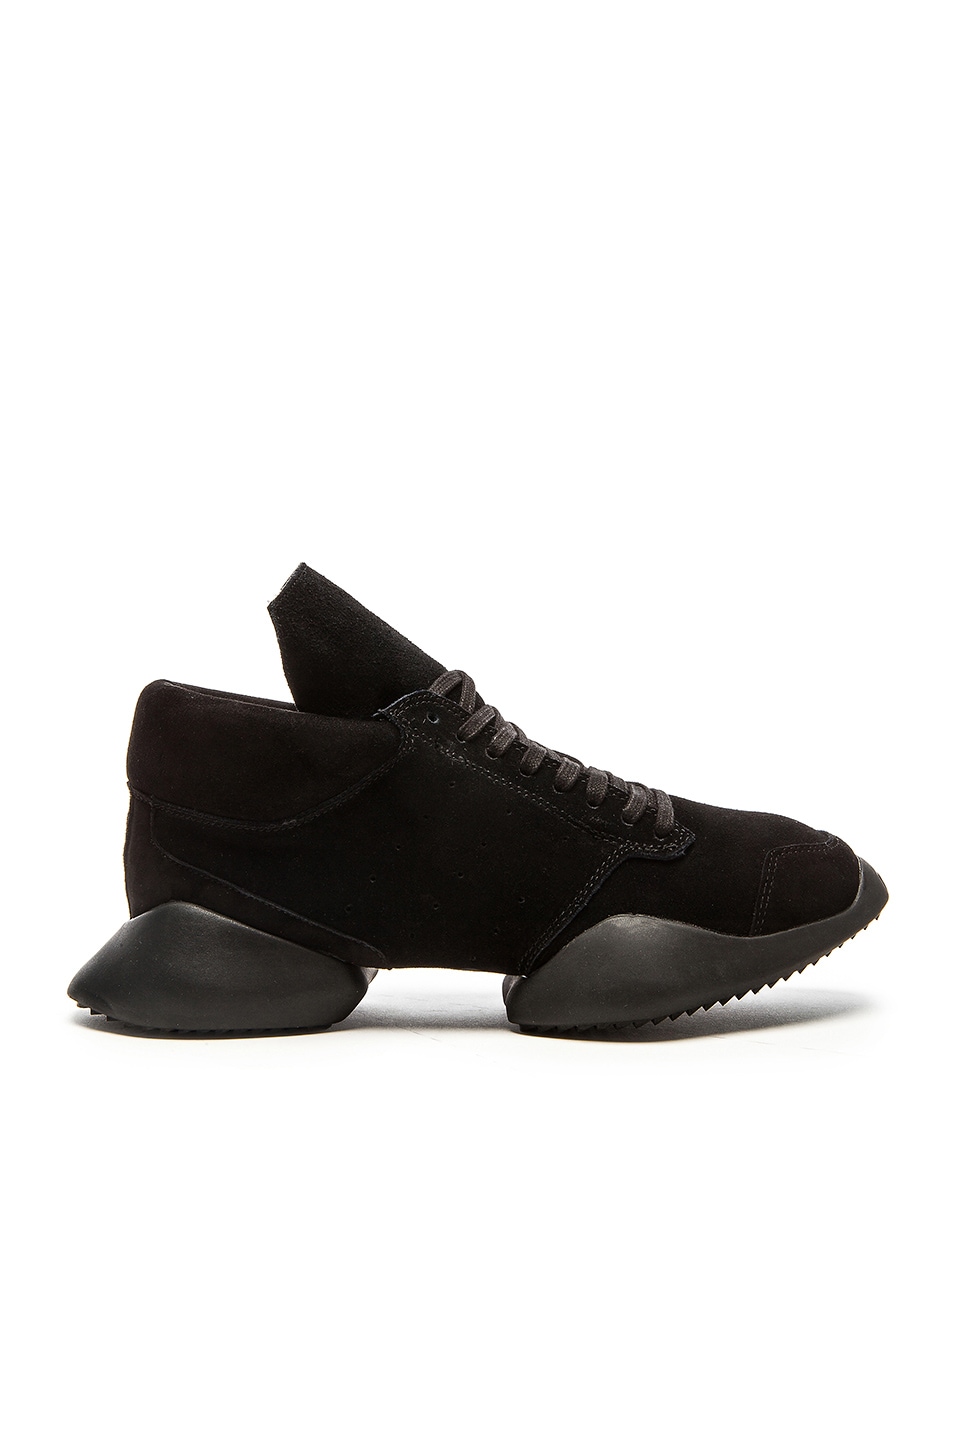 adidas by Rick Owens Runner in Core Black Core Black Core Black | REVOLVE